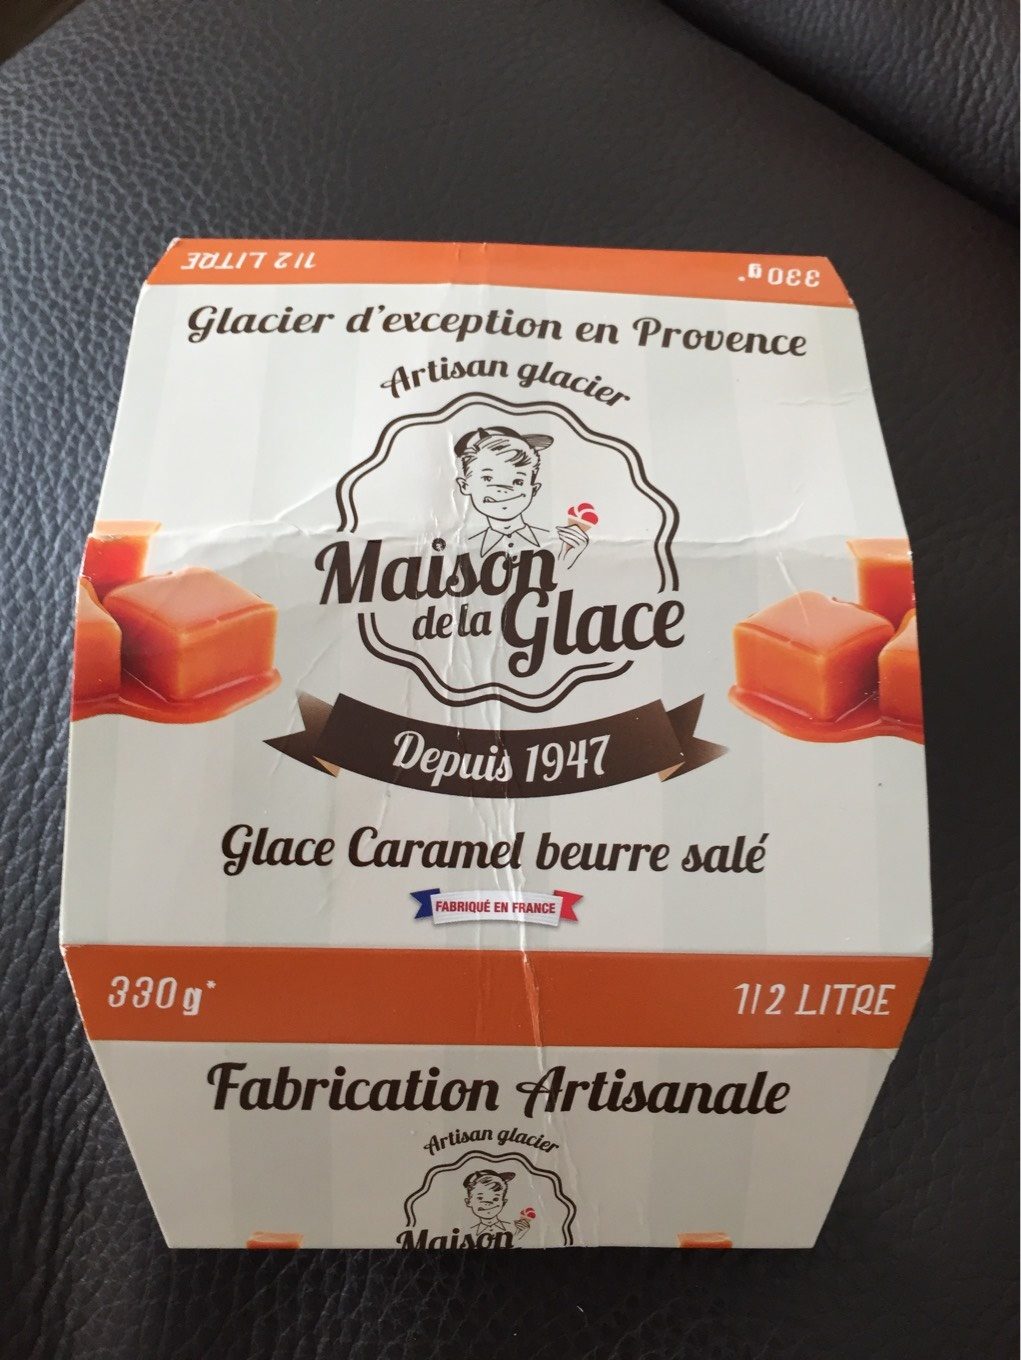 Glace artisanale caramel au beurre sale - Product - fr